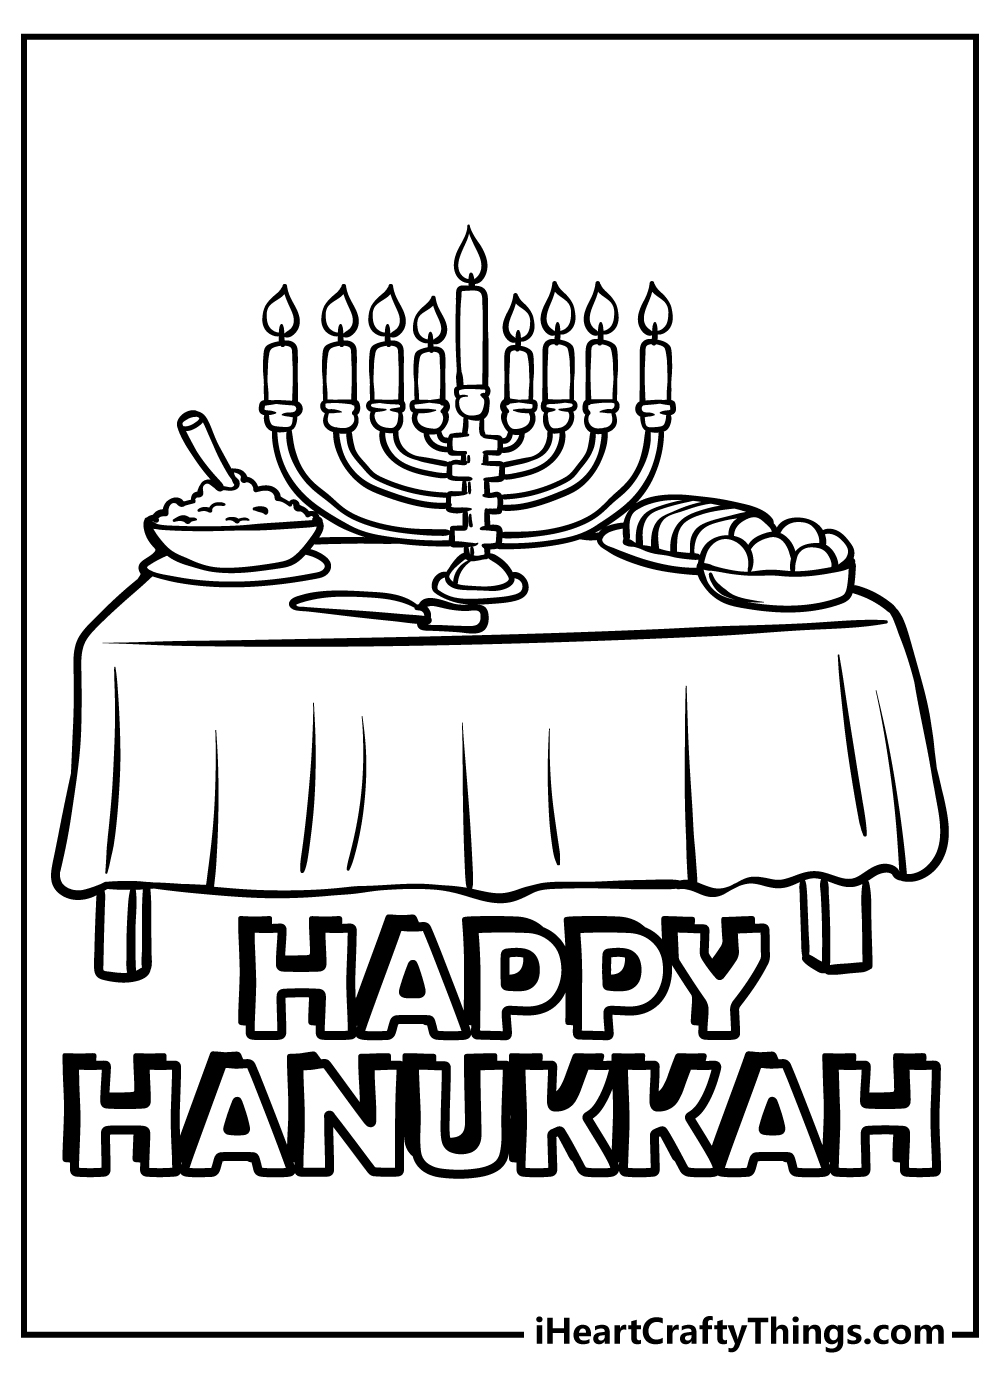 Hanukkah Coloring Pages for preschoolers free printable